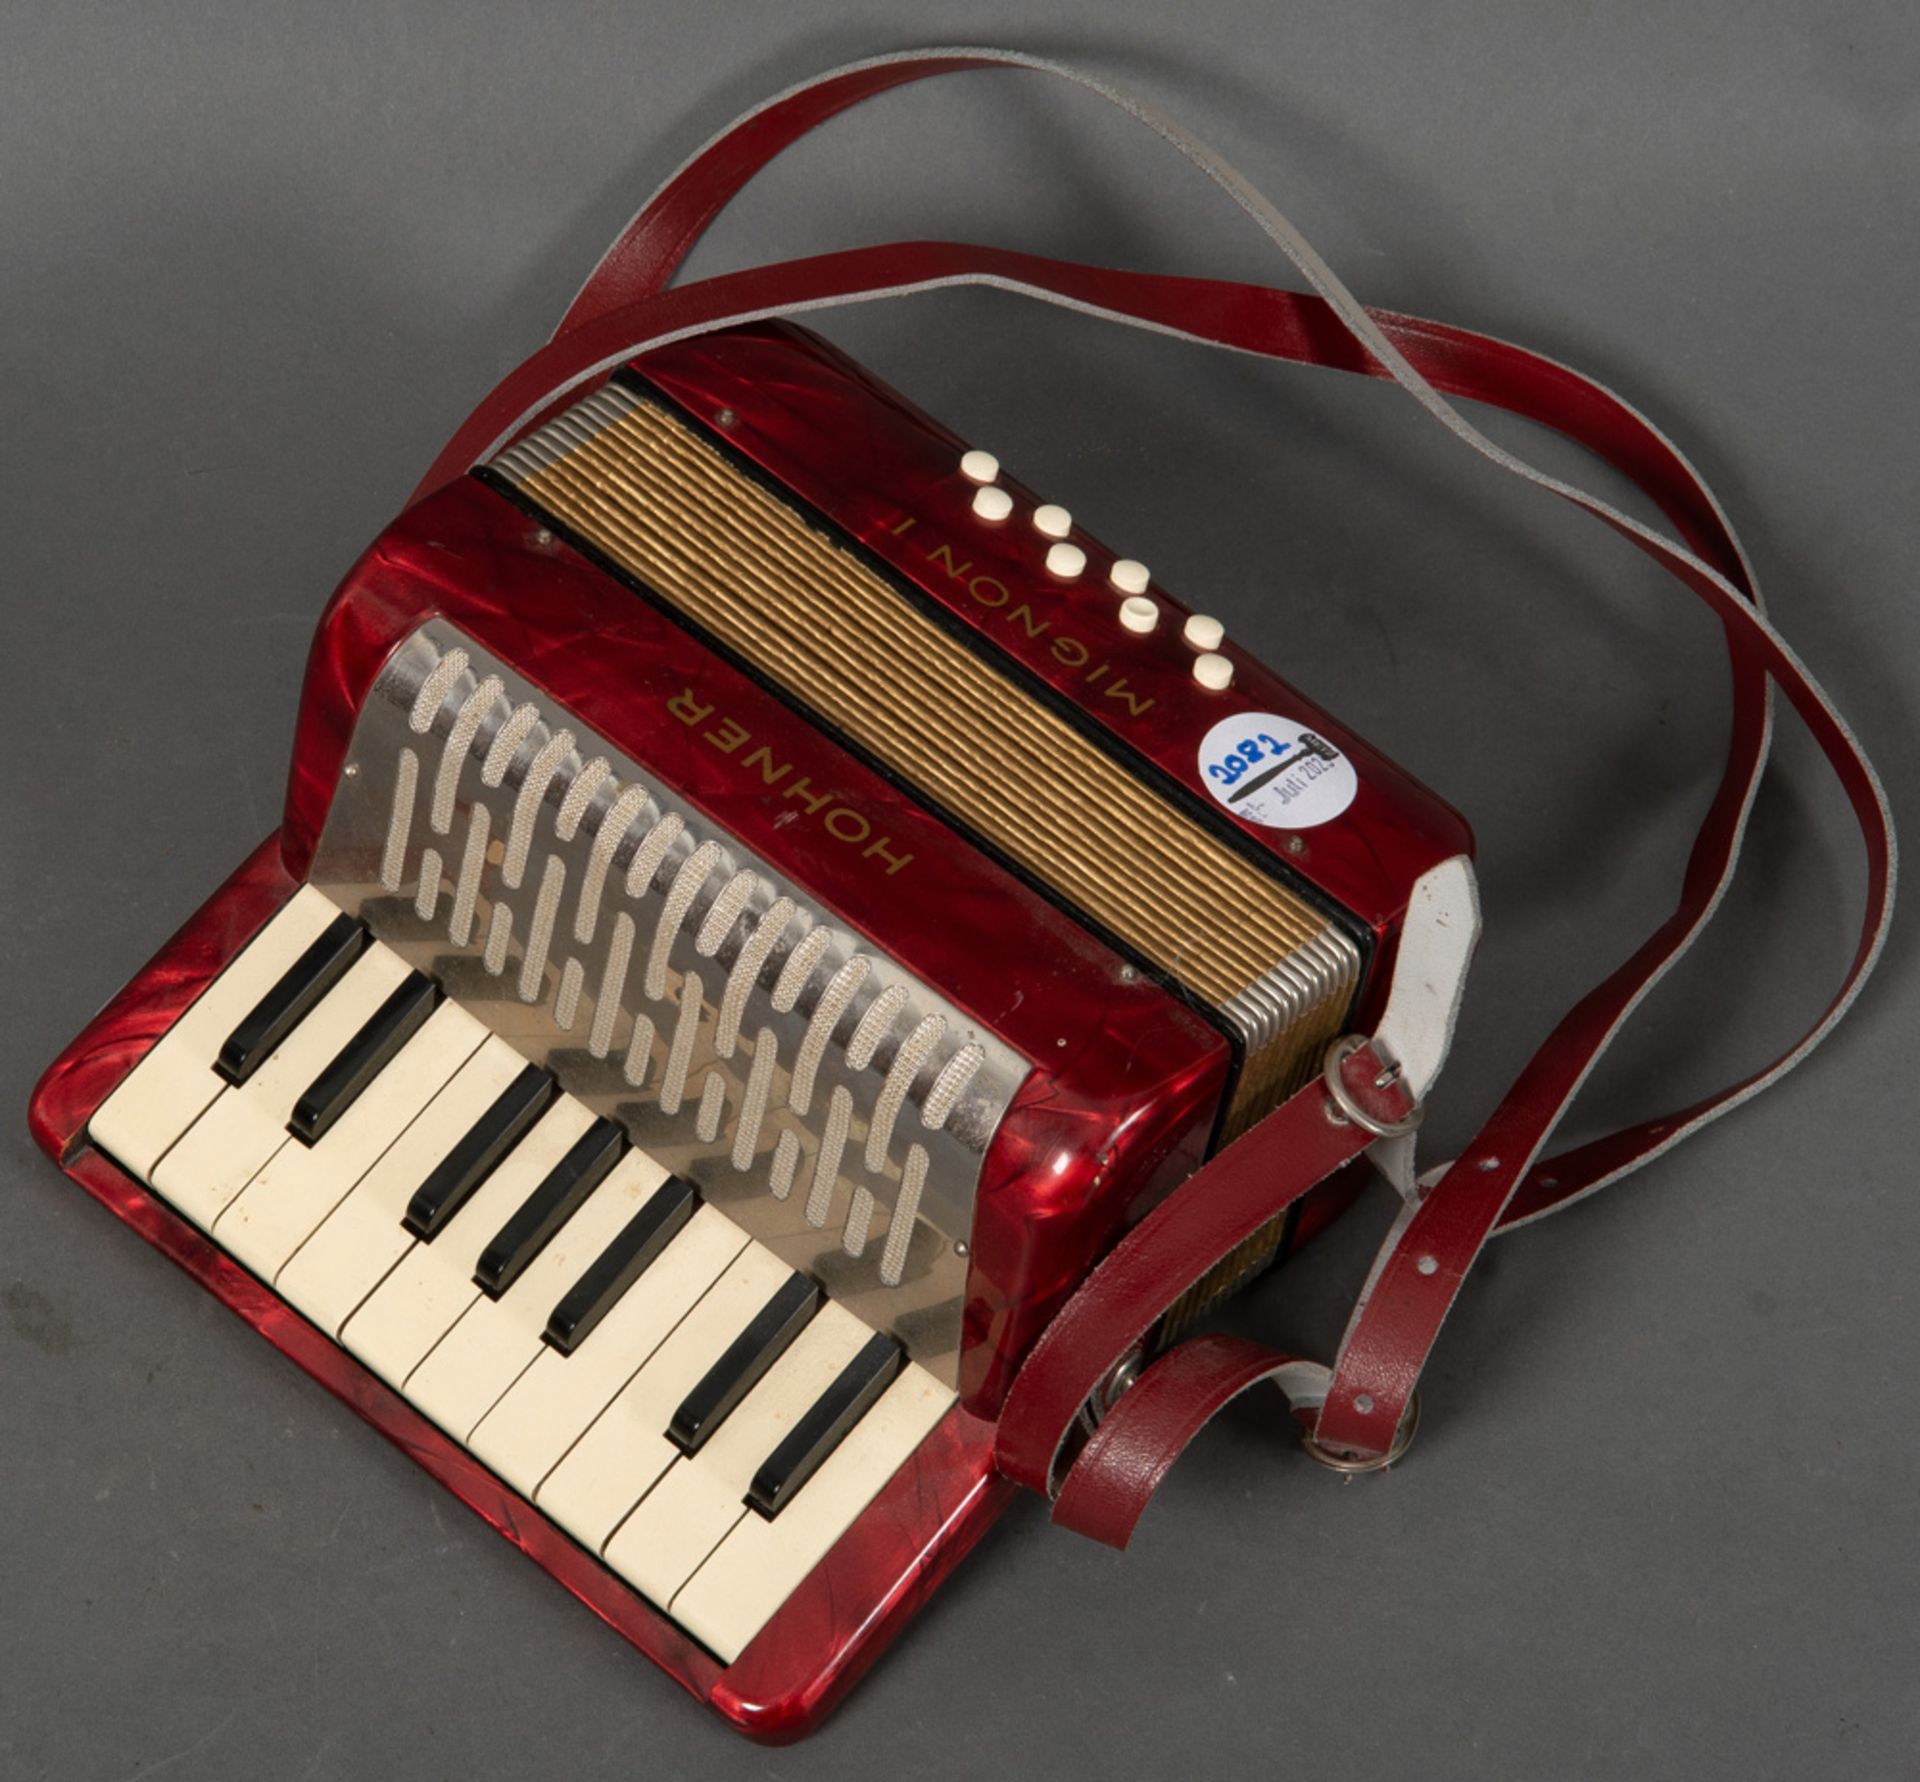 Kinder-Ziehharmonika. Marke Hohner 20. Jh. Modell Mignon I, H=21,5 cm. (Funktion ungeprüft).